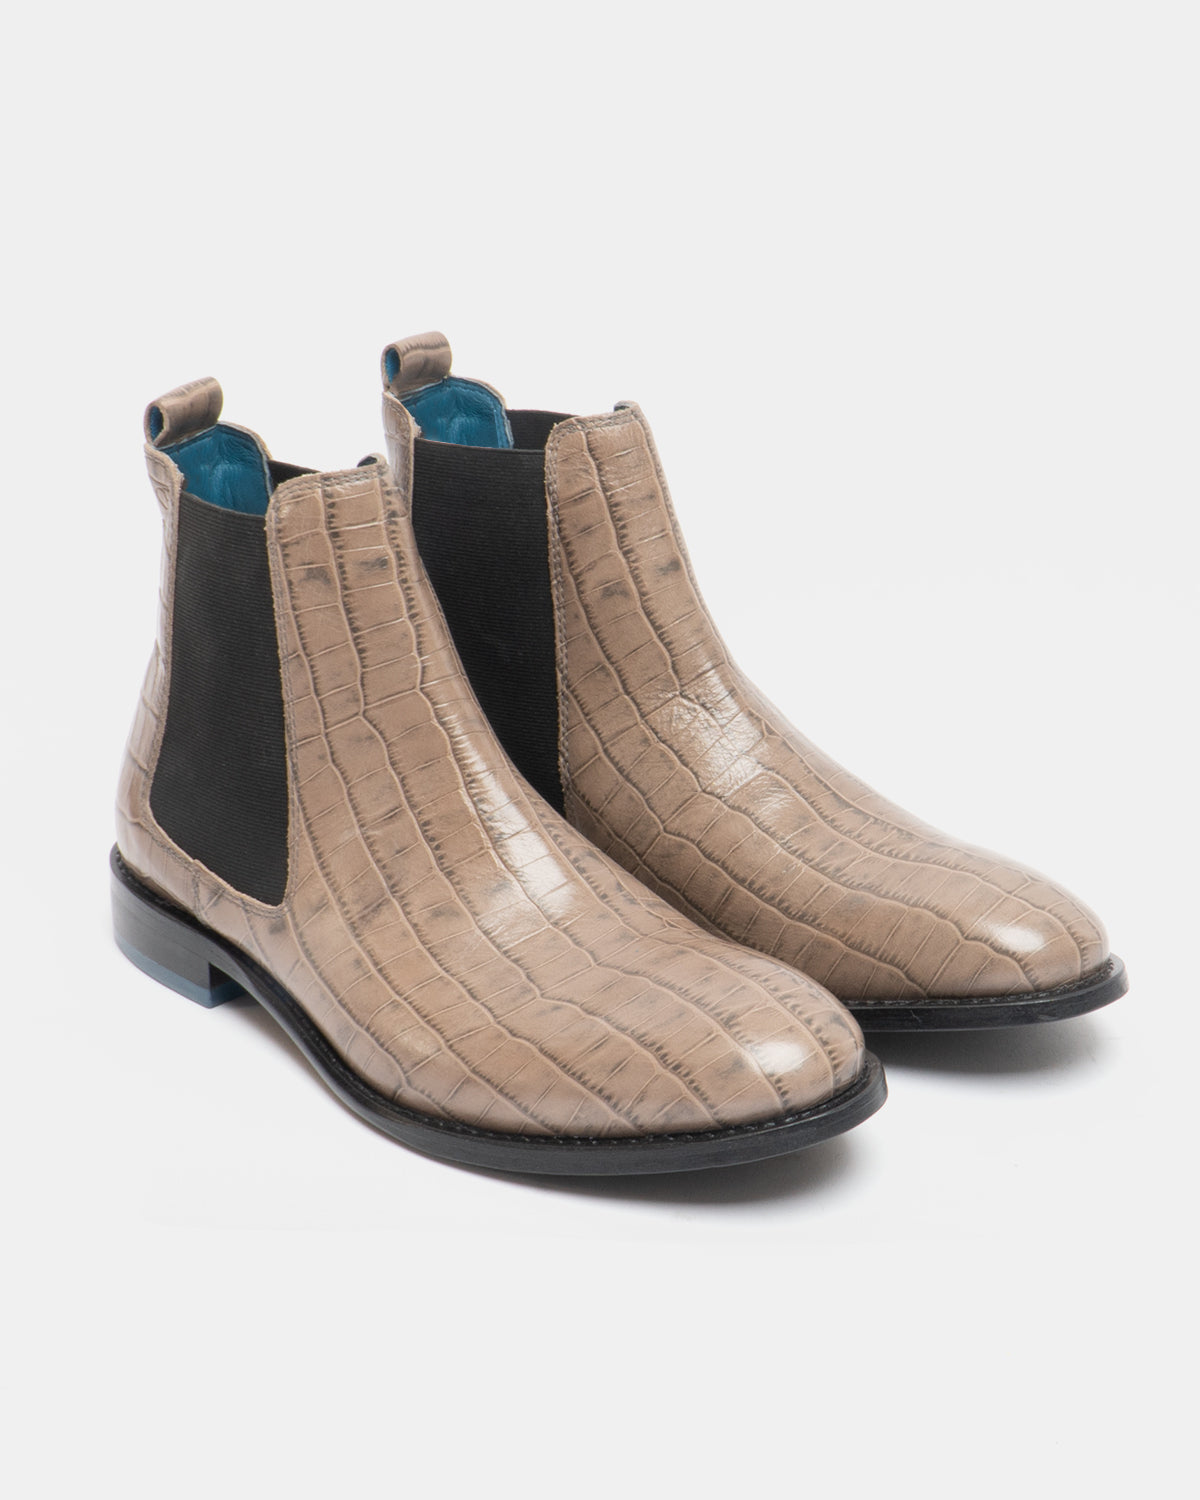 Men's grey croc leather Chelsea boot